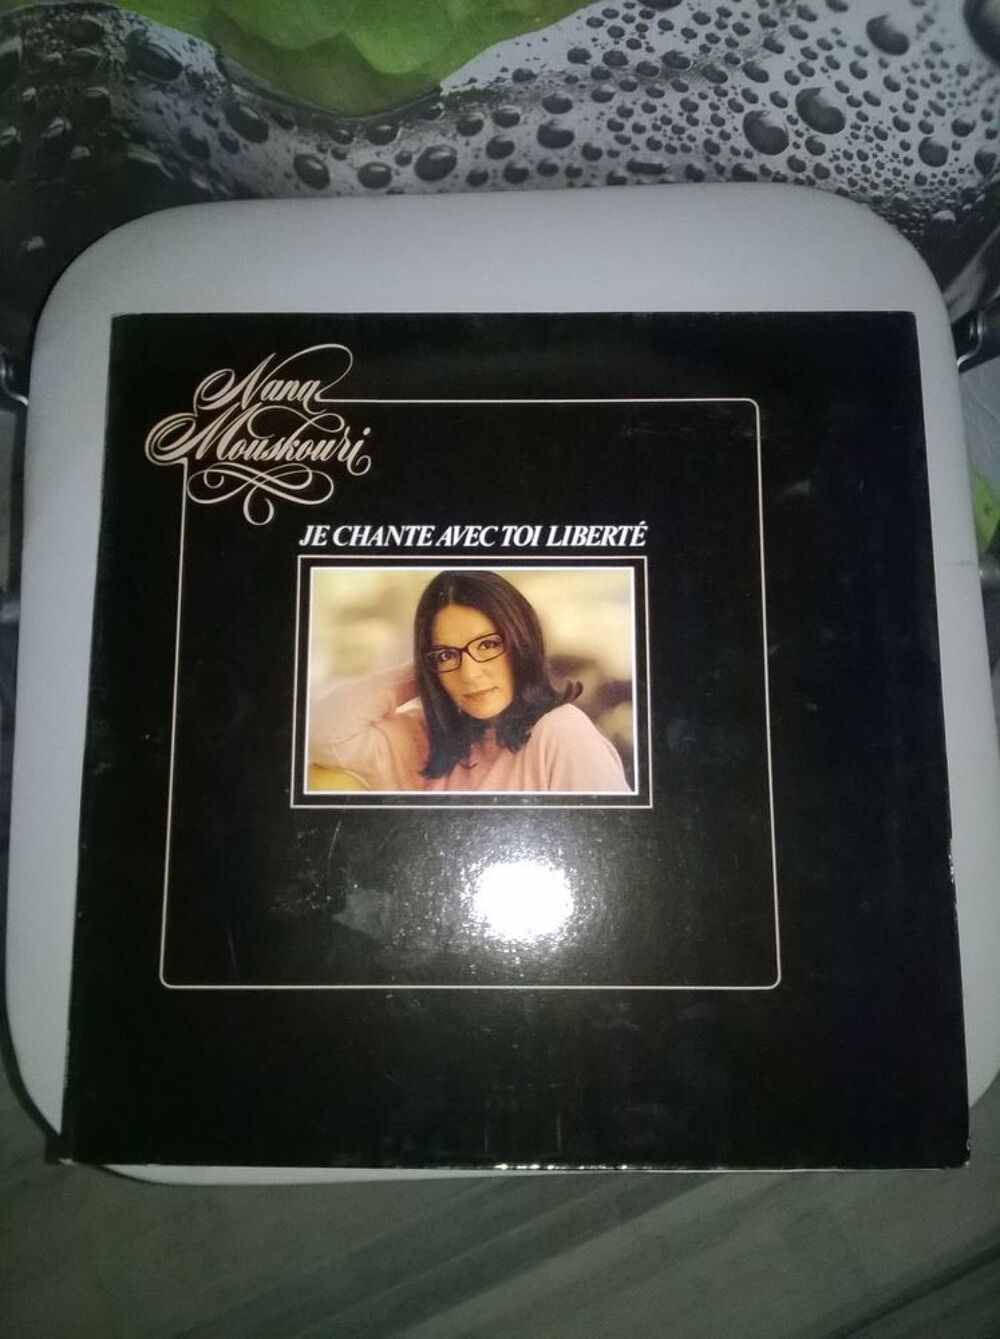 Vinyle Nana Mouskouri
Je Chante avec toi Libert&eacute;
1981 CD et vinyles